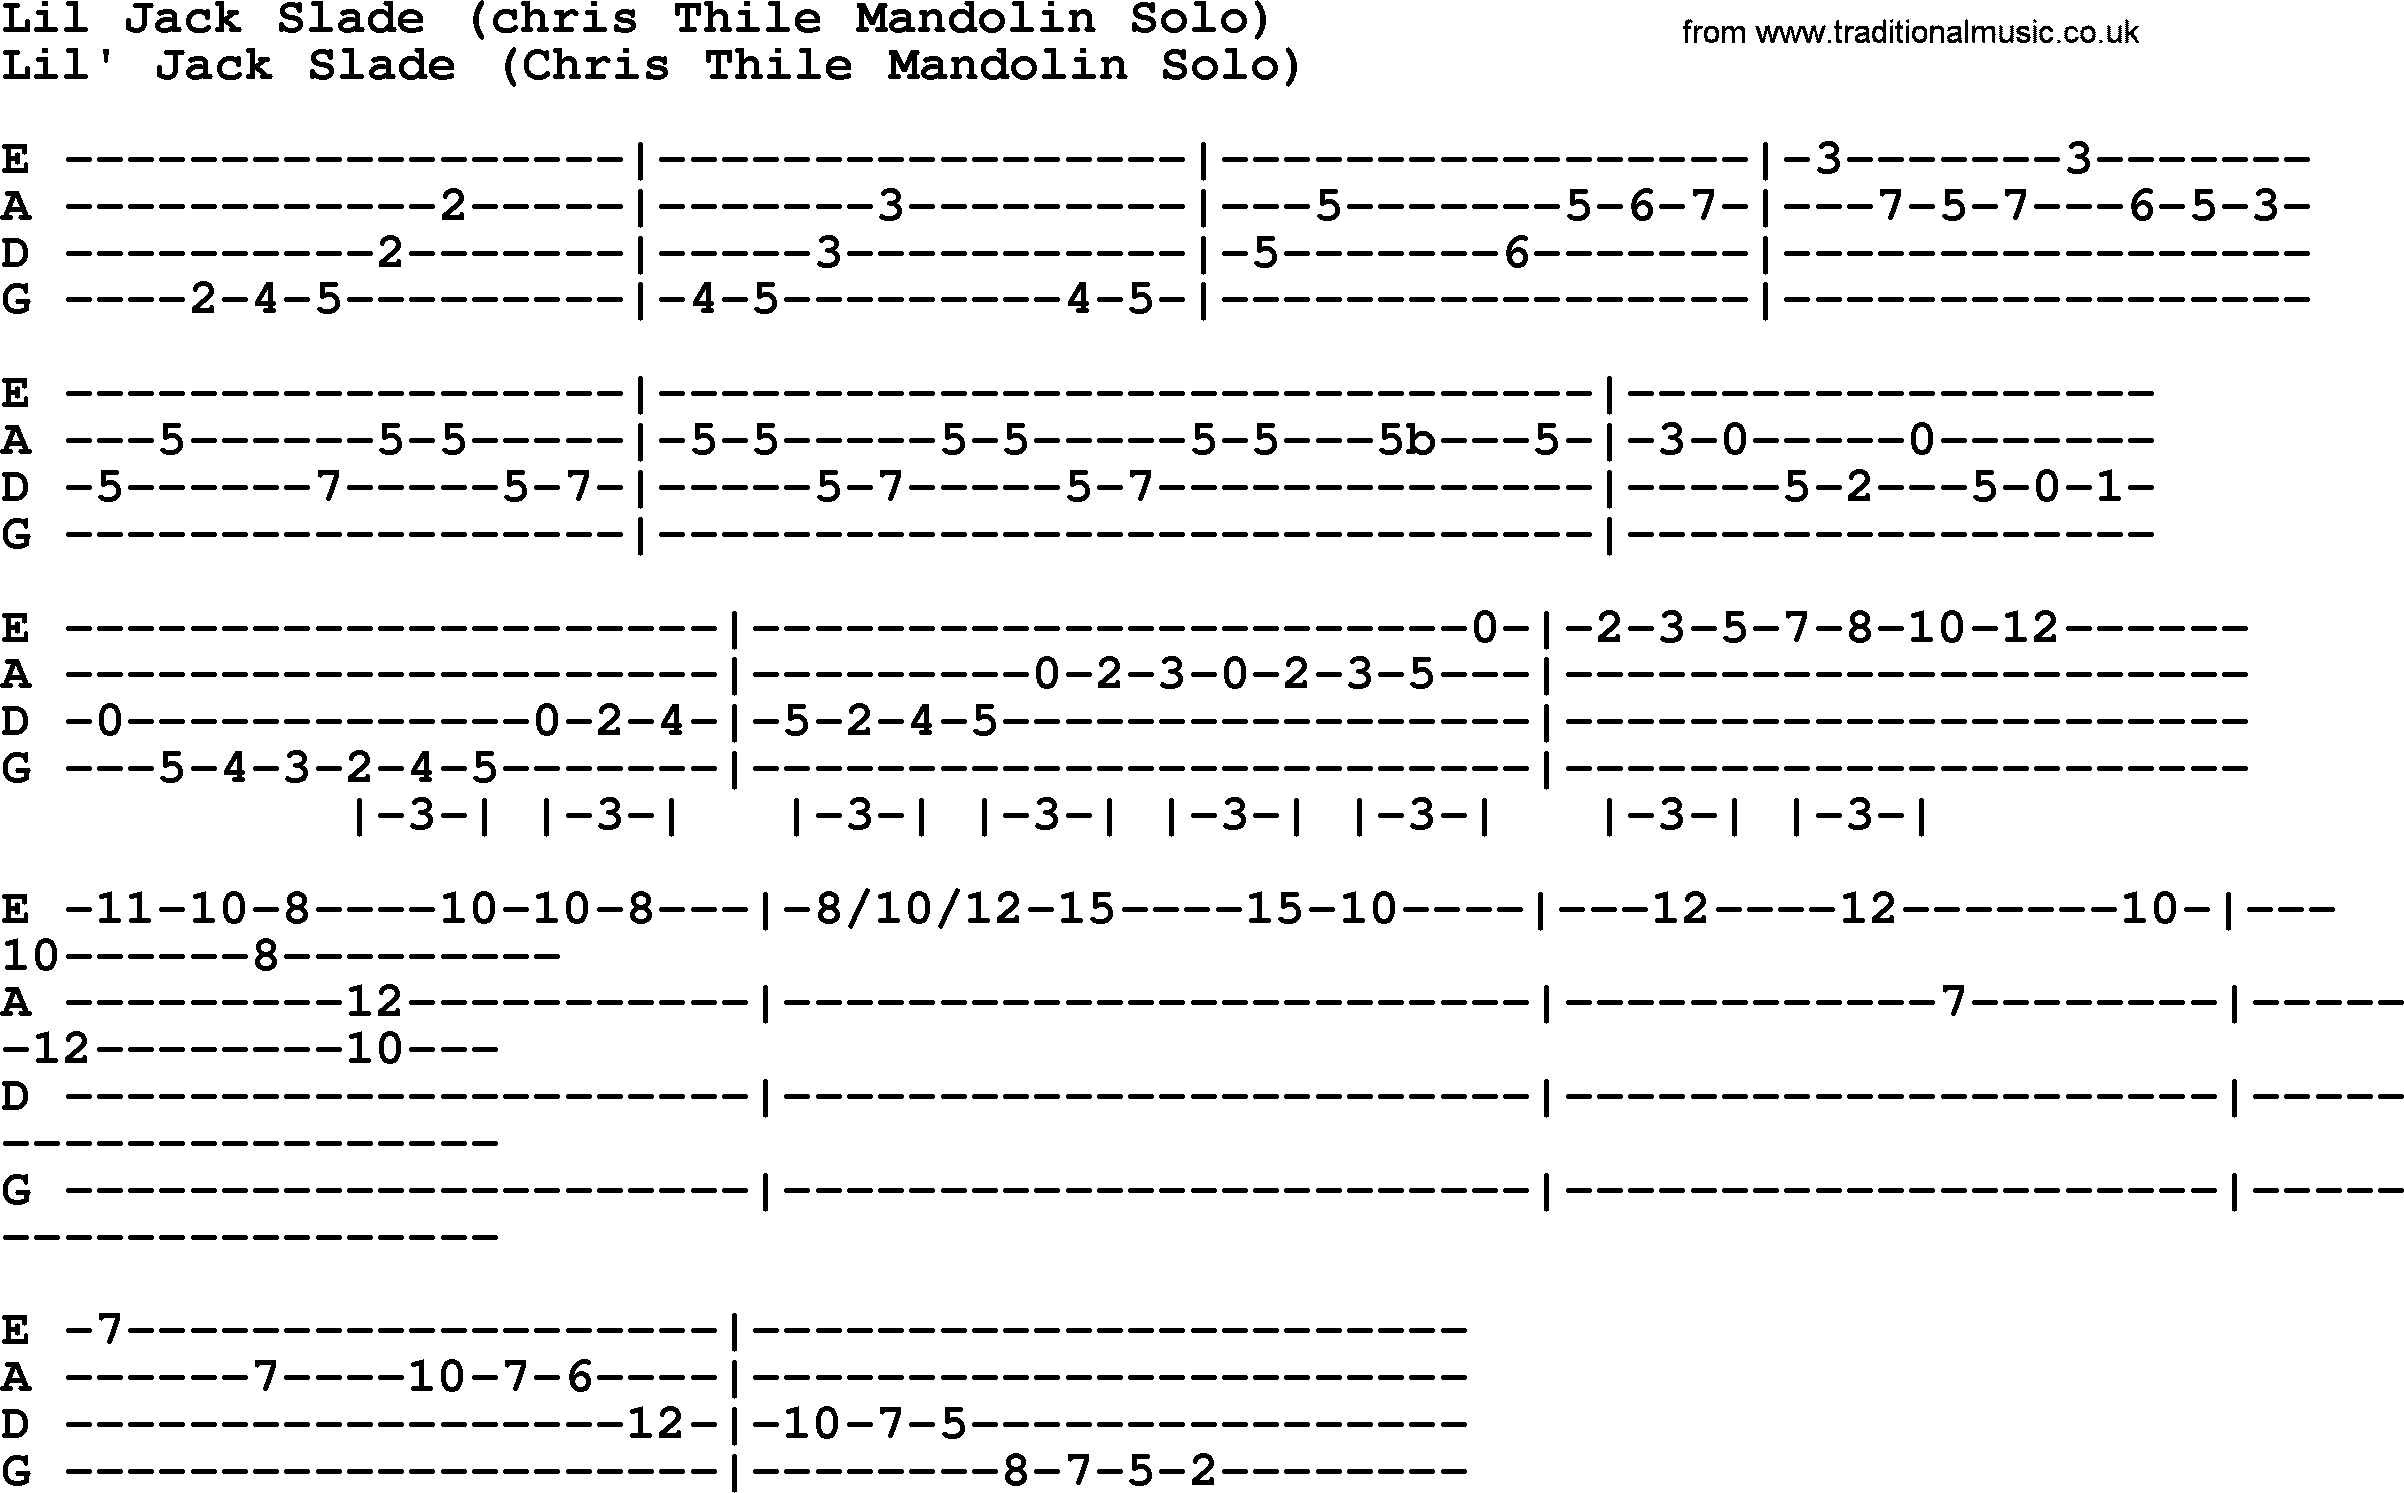 Bluegrass song: Lil Jack Slade (Chris Thile Mandolin Solo), lyrics and chords